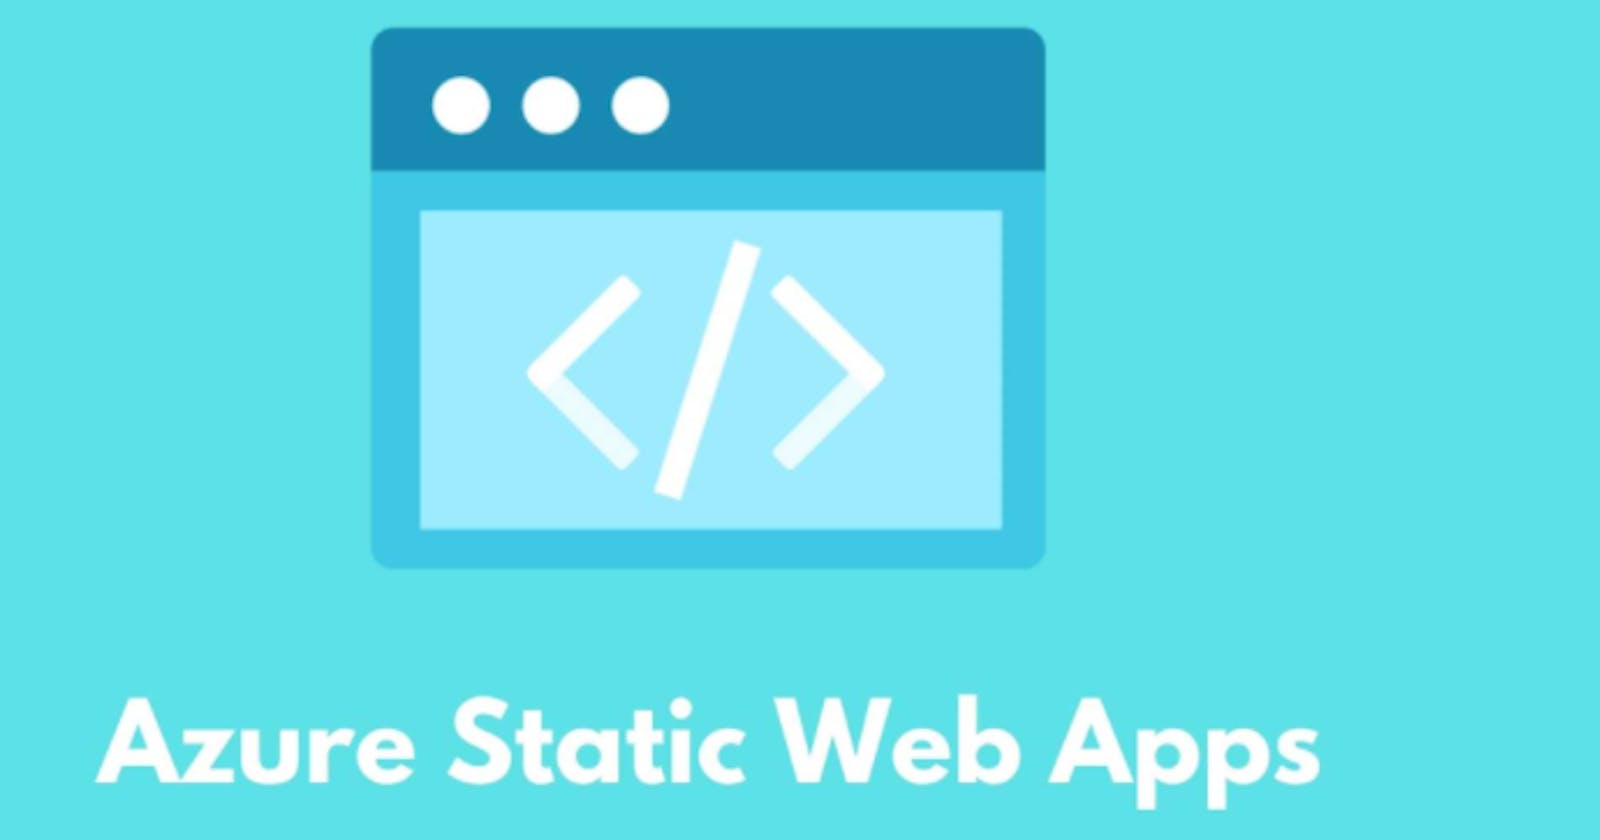 Azure Static Web Apps (FaceAPP Deployed on Azure for free)